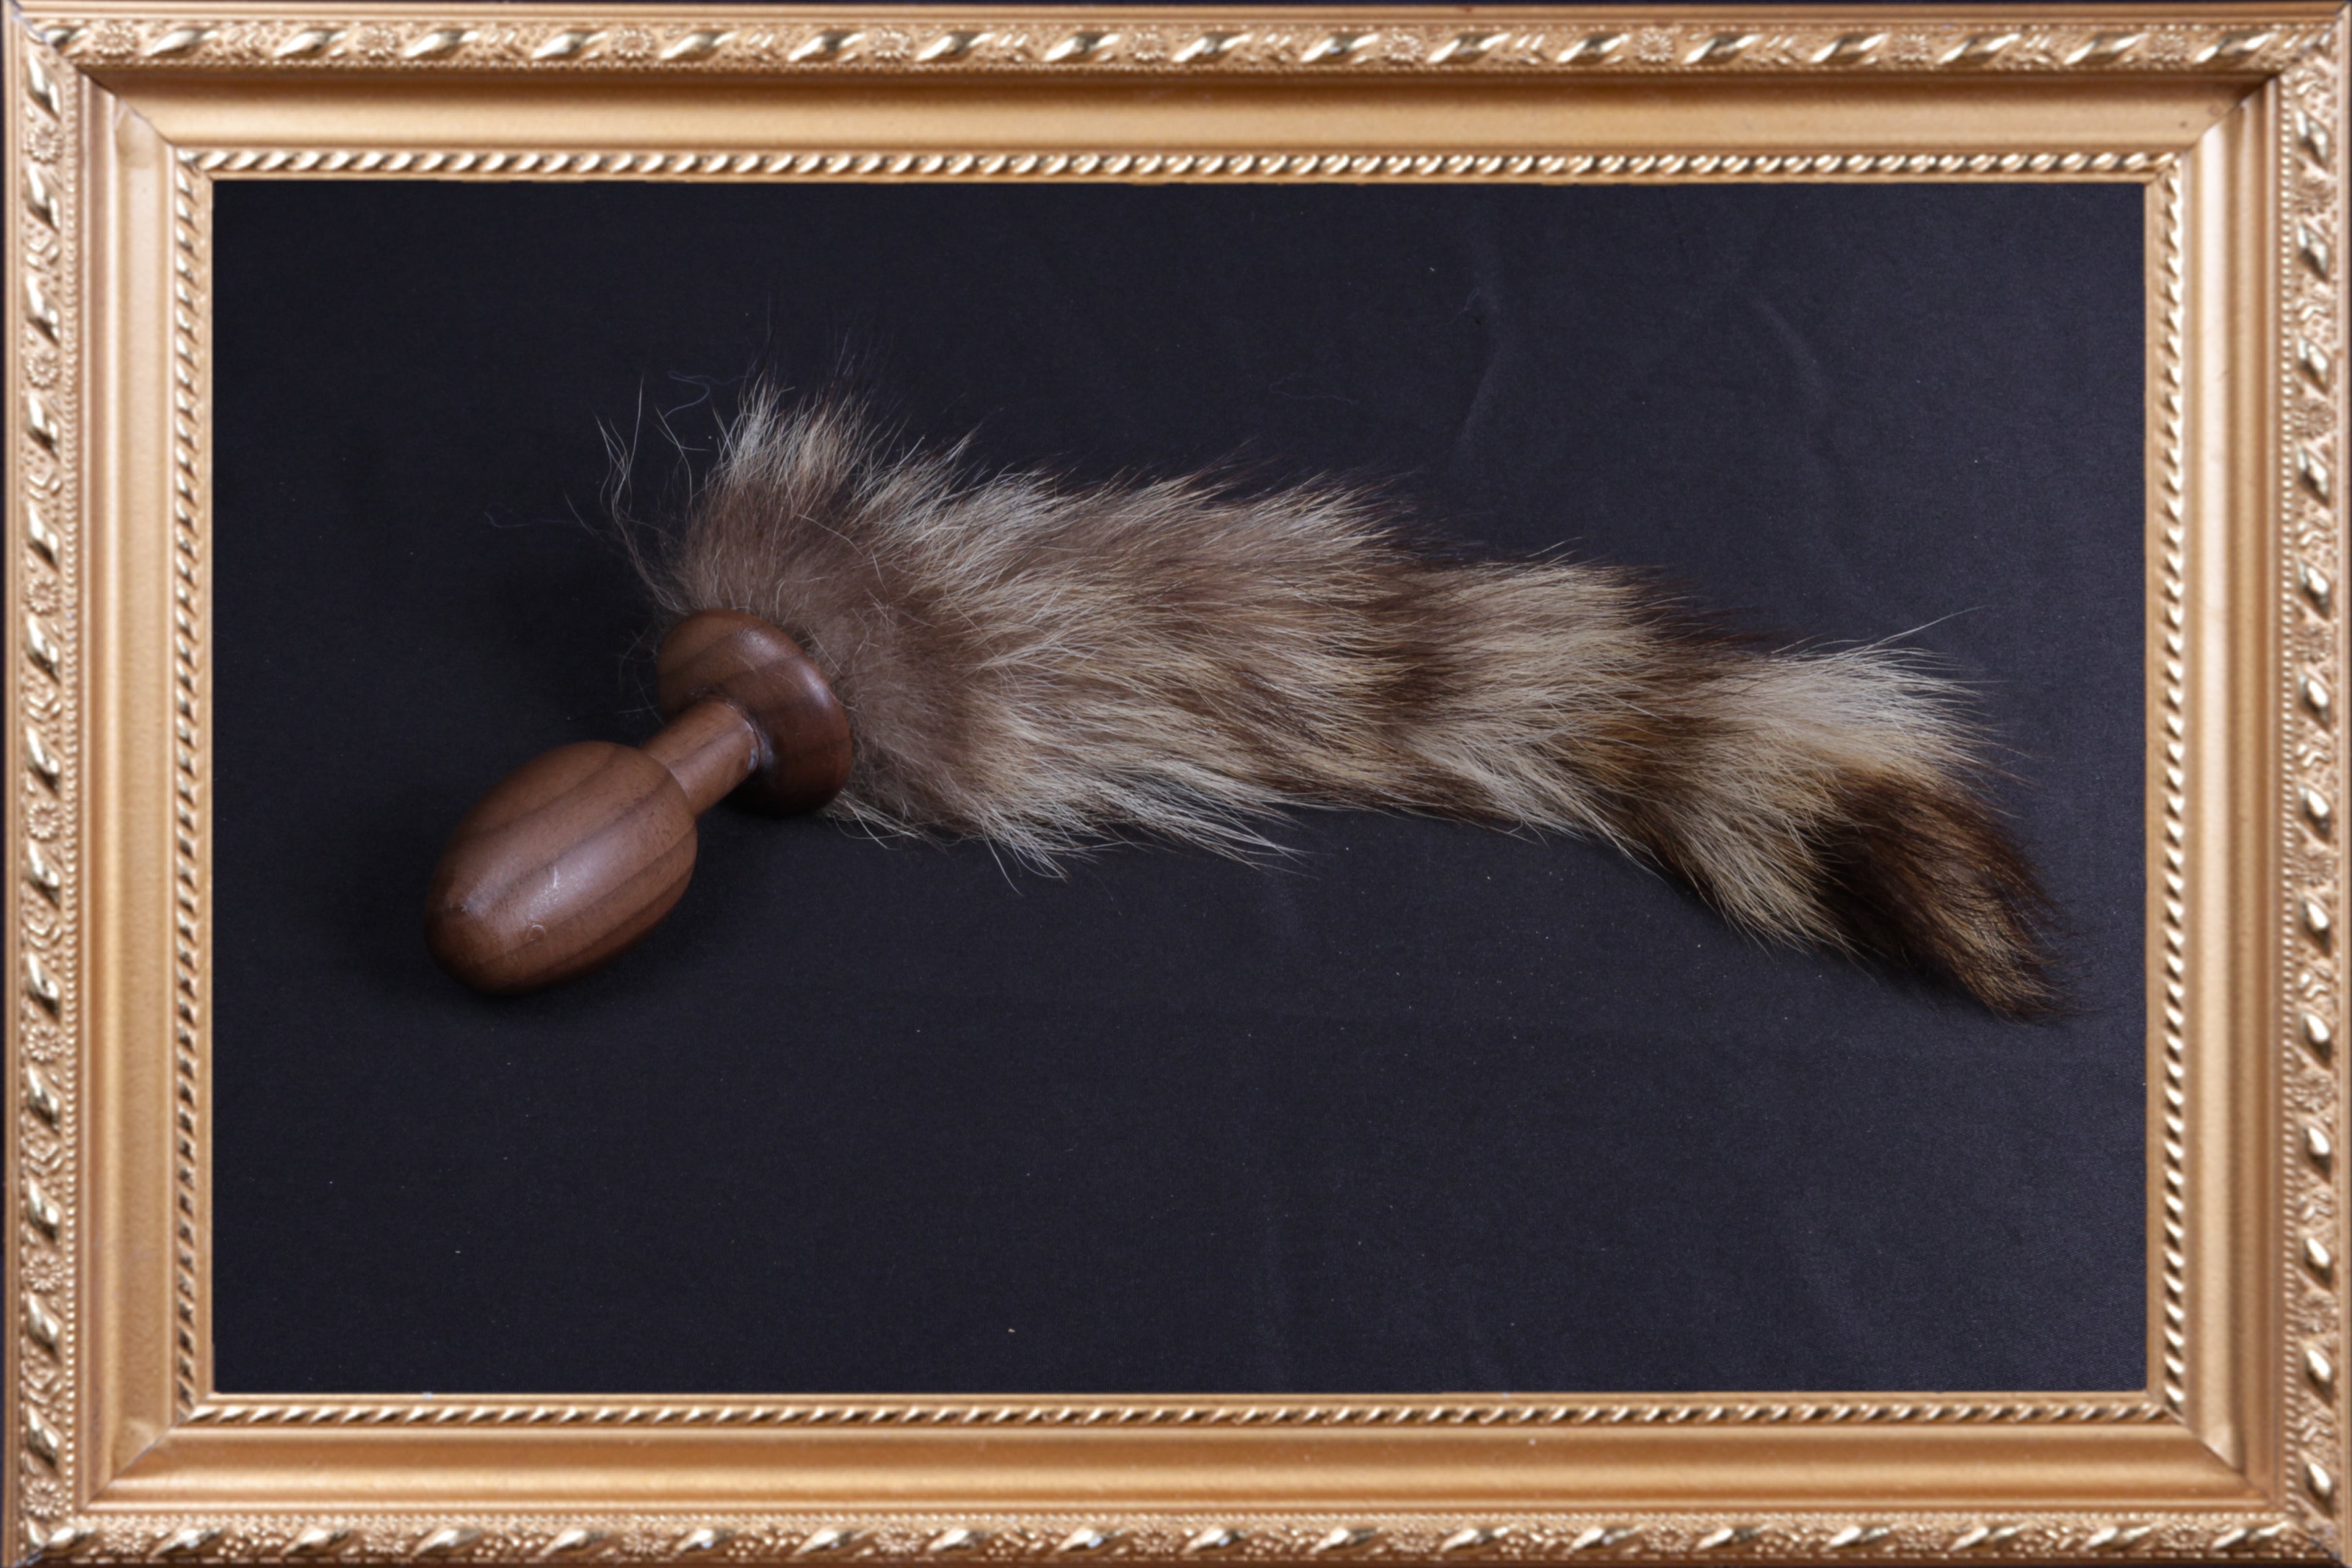 OACHKATZLSCHWOAF Nuss Waschbär || Wooden Furry Tail Anal Butt Plug Holz|| Fox Bunny Raccoon || Sex Toy || Handmade by Holz-Knecht.at